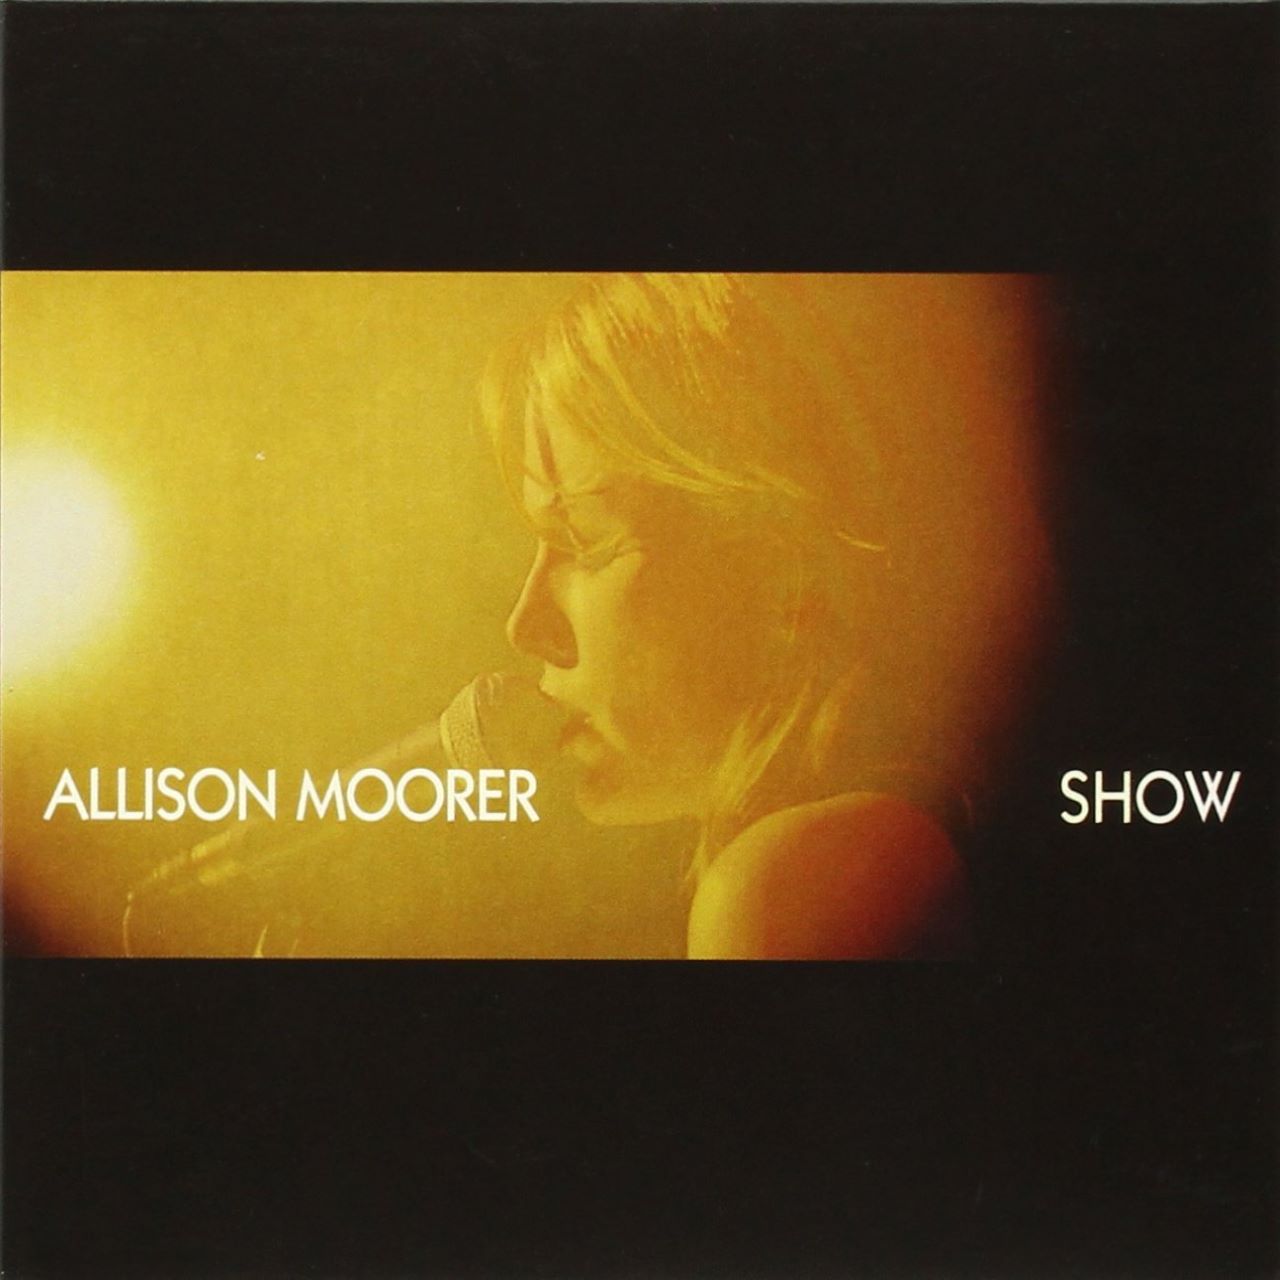 Allison Moorer - Show cover album